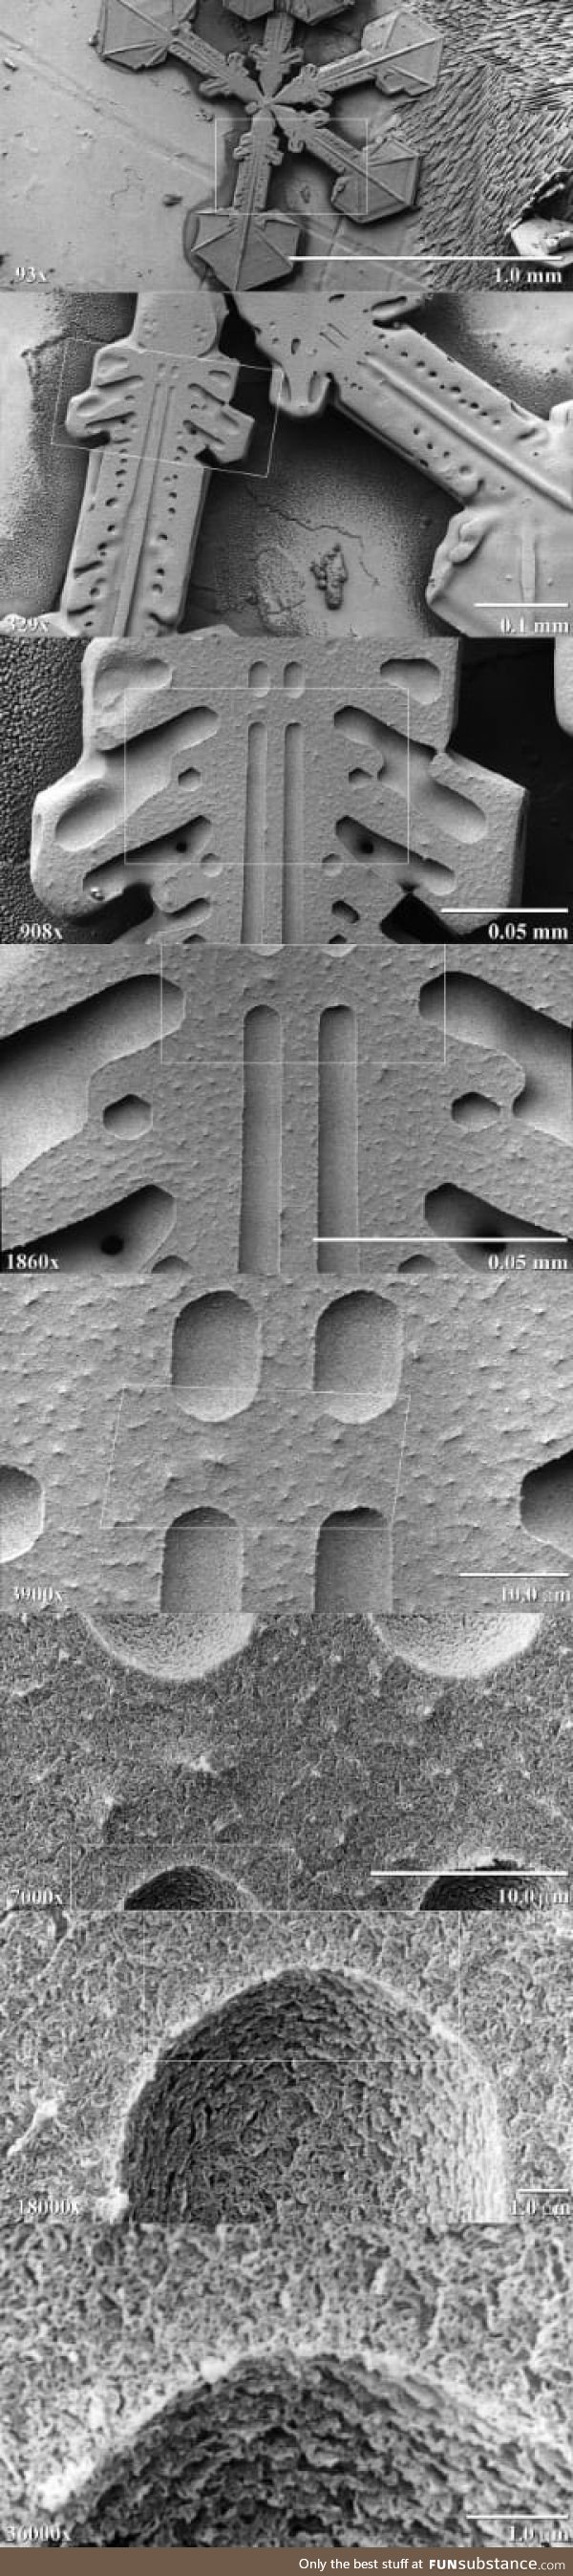 Snowflake under an electron microscope